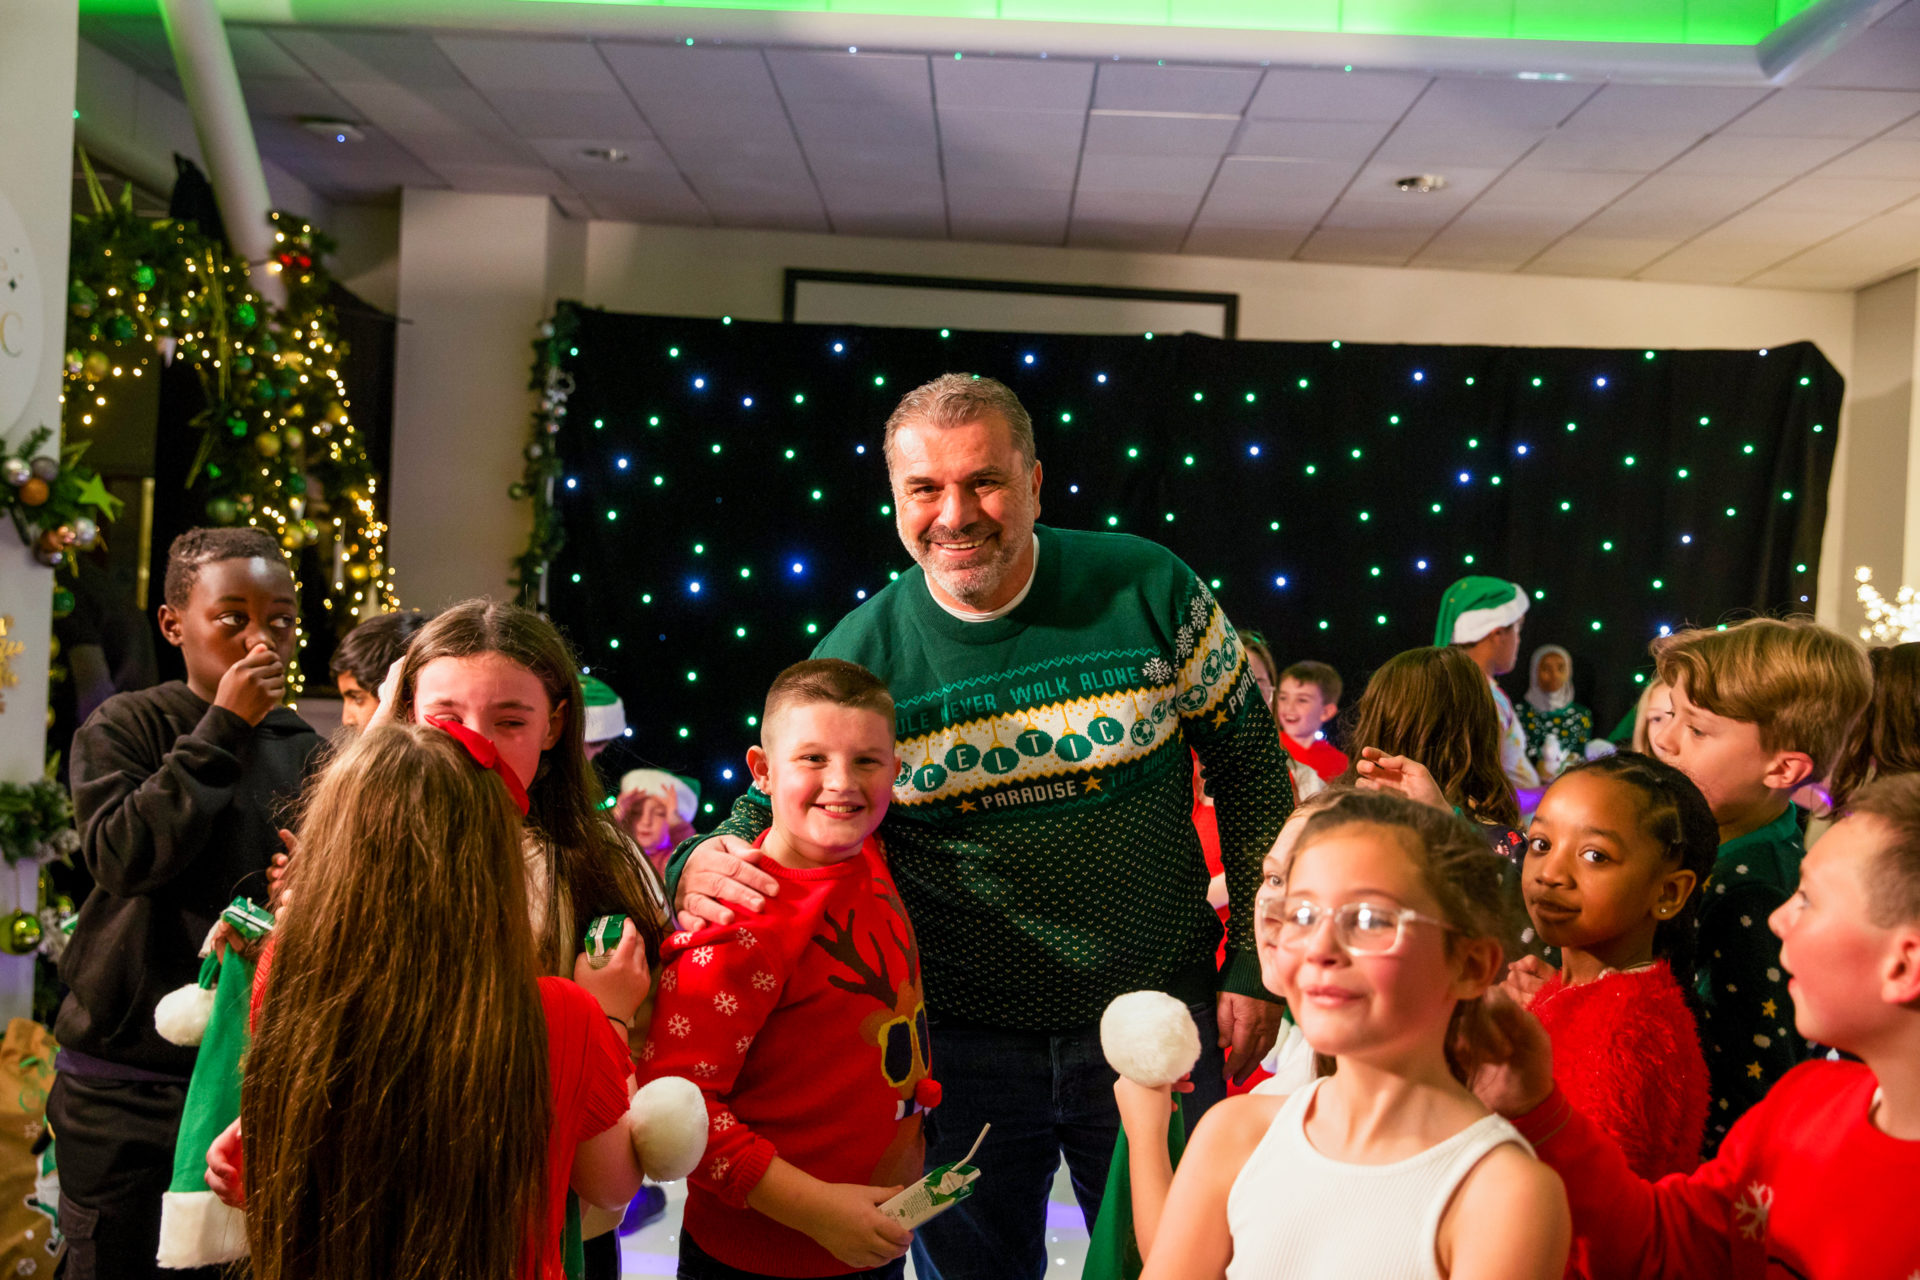 Celtic make £10,000 donation to kick off ‘Share The Magic’ Christmas campaign